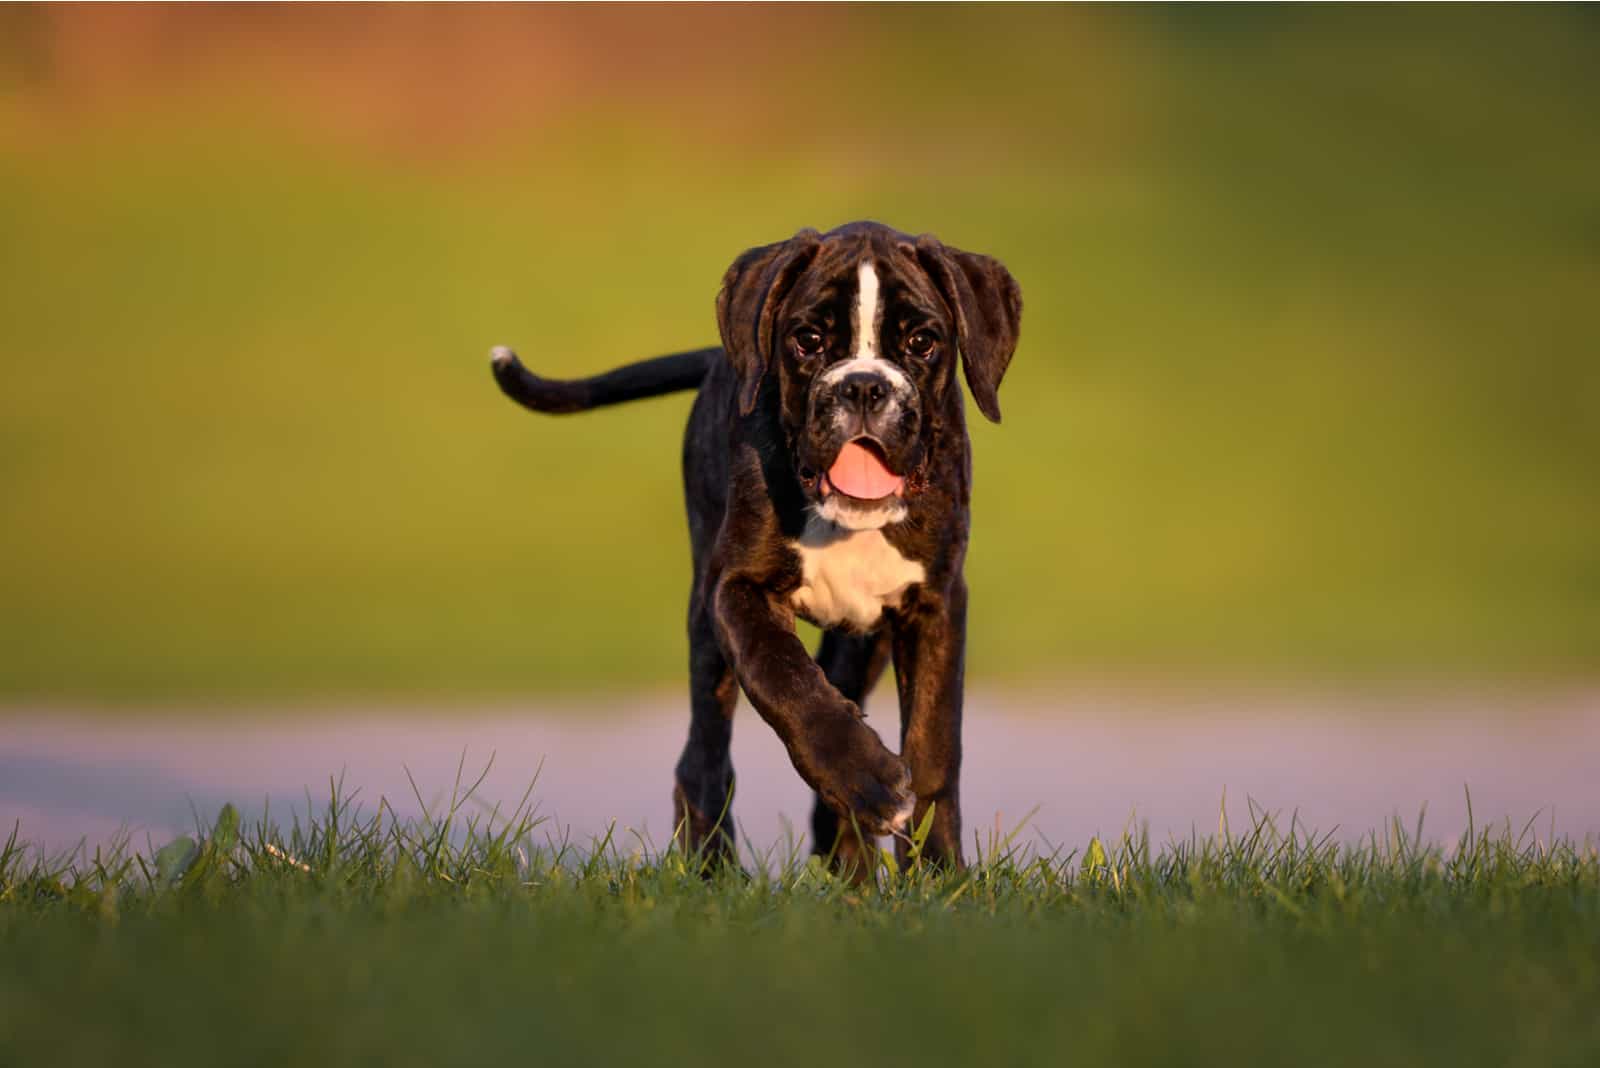 Boxer puppy walking on grass